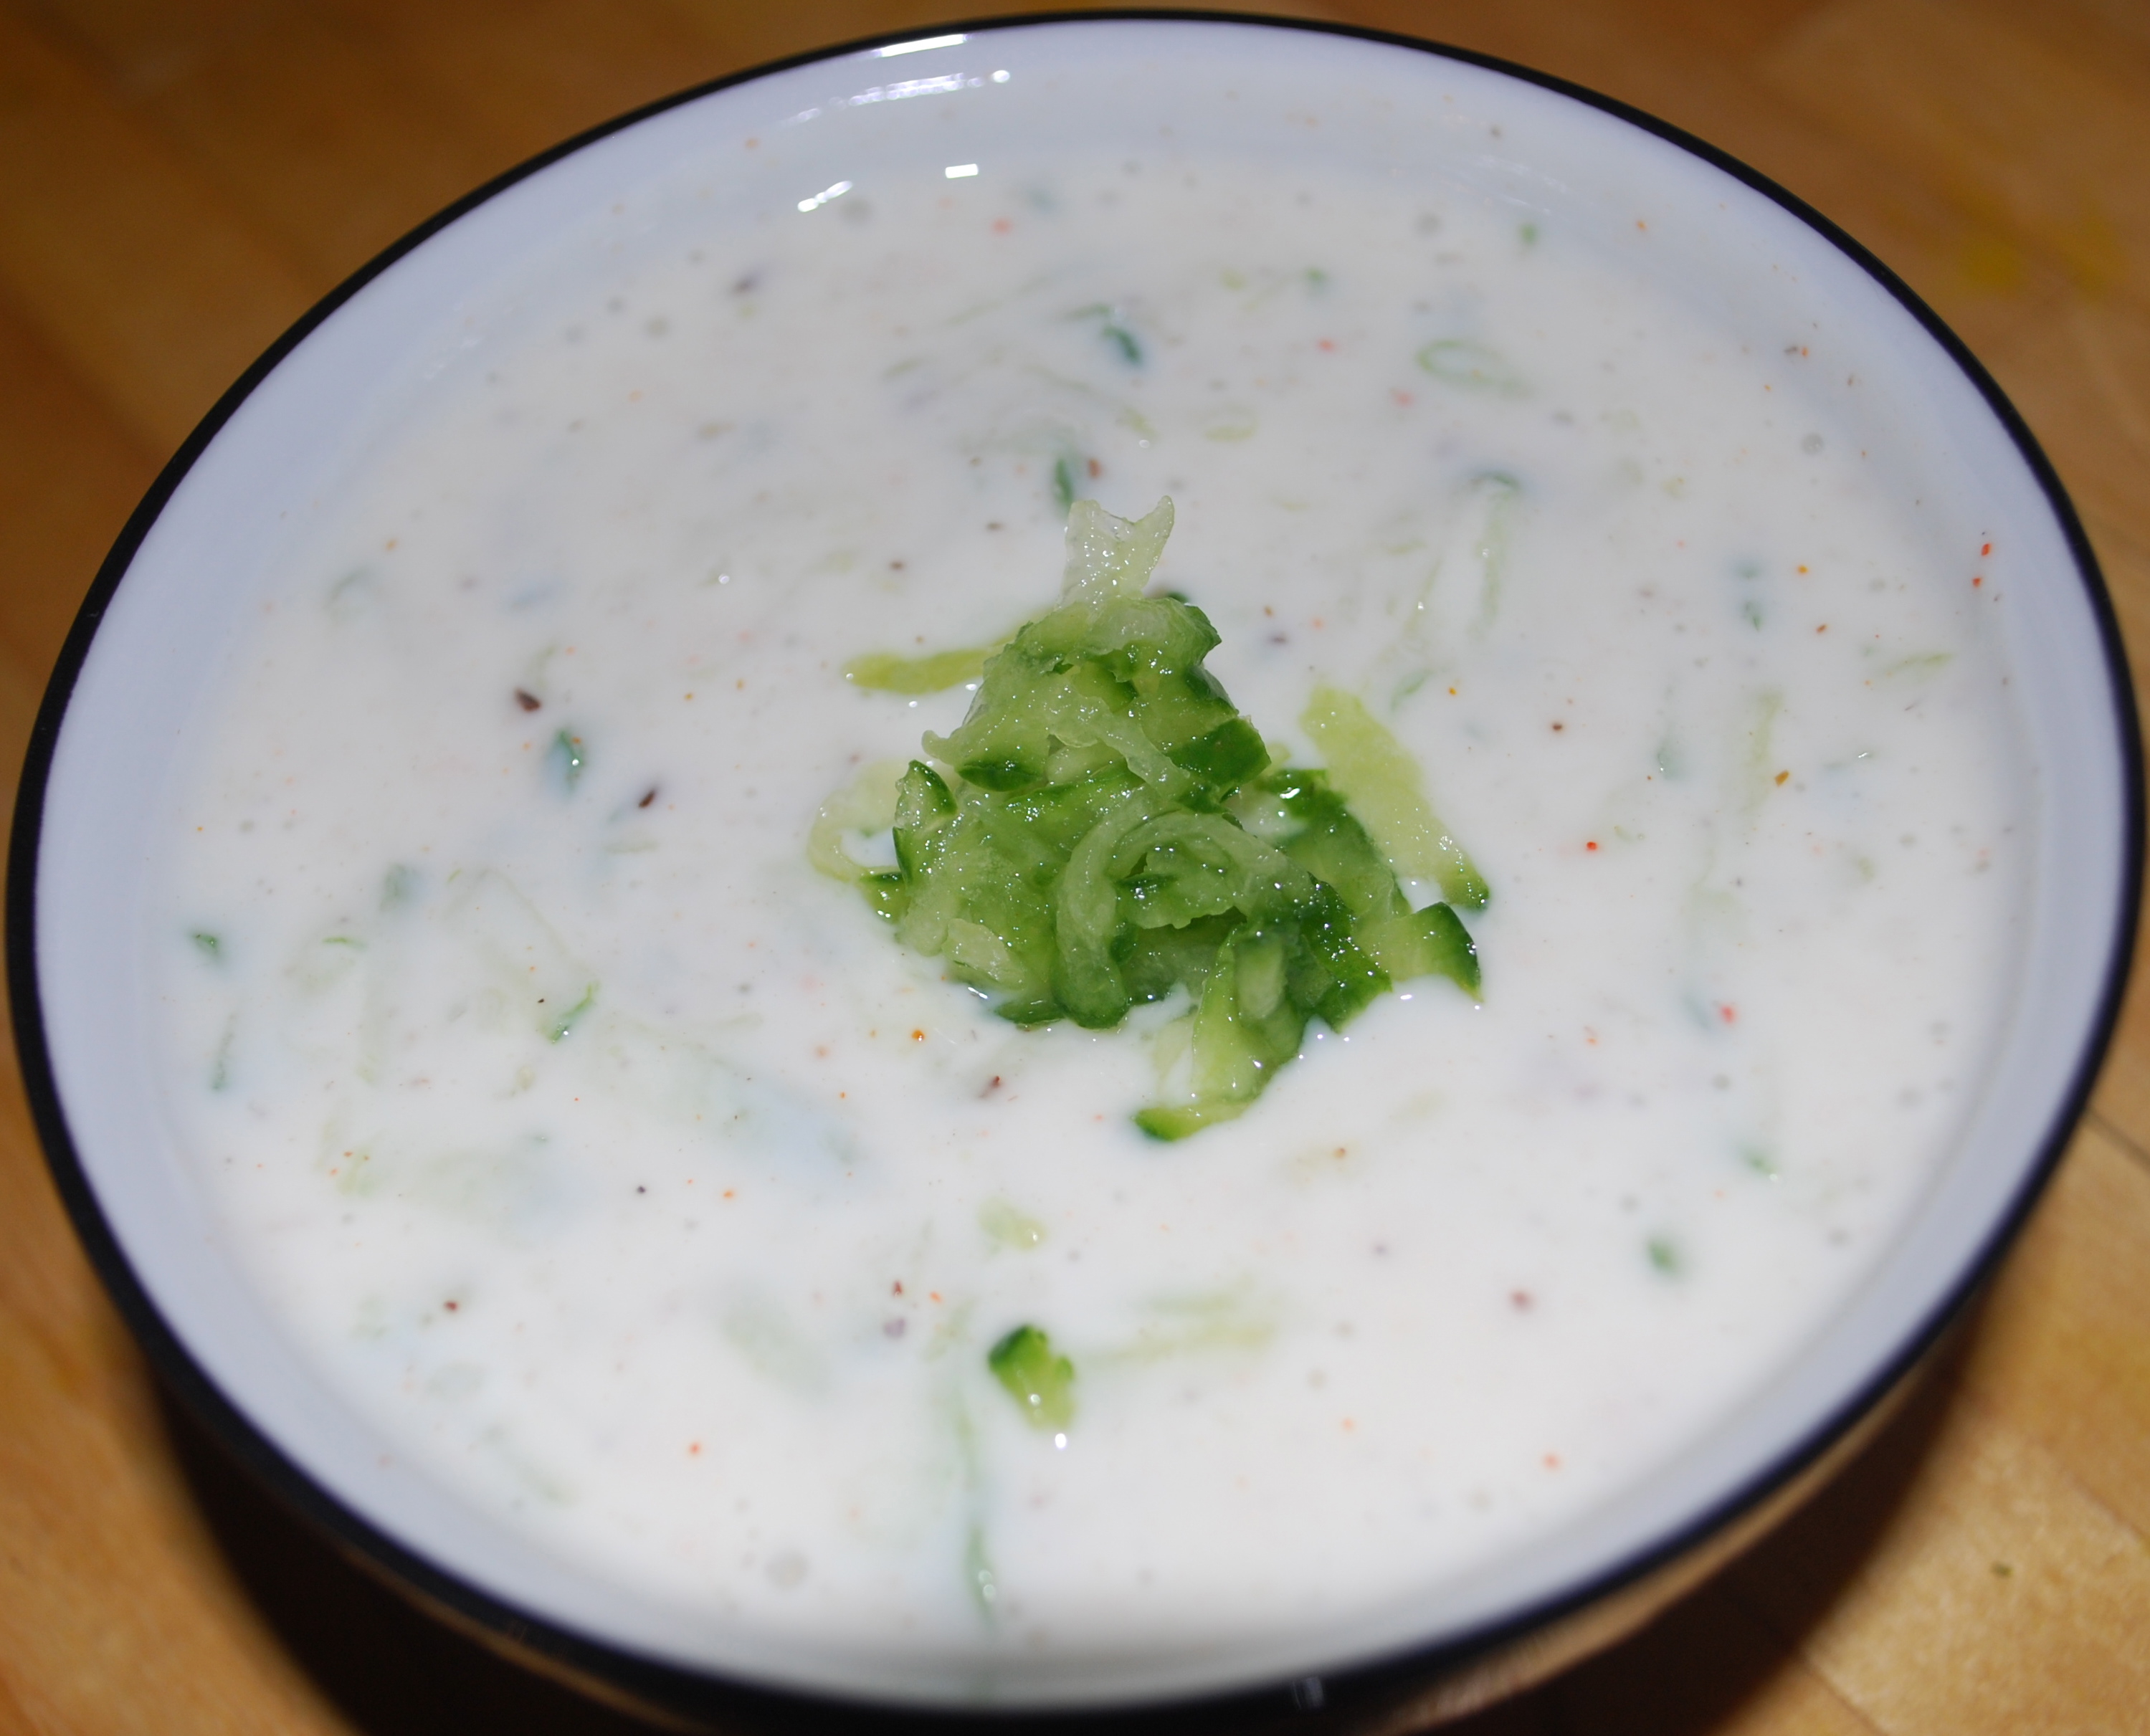 Agurk raita er en forfriskende flytende salat. Et must til indiske retter. 